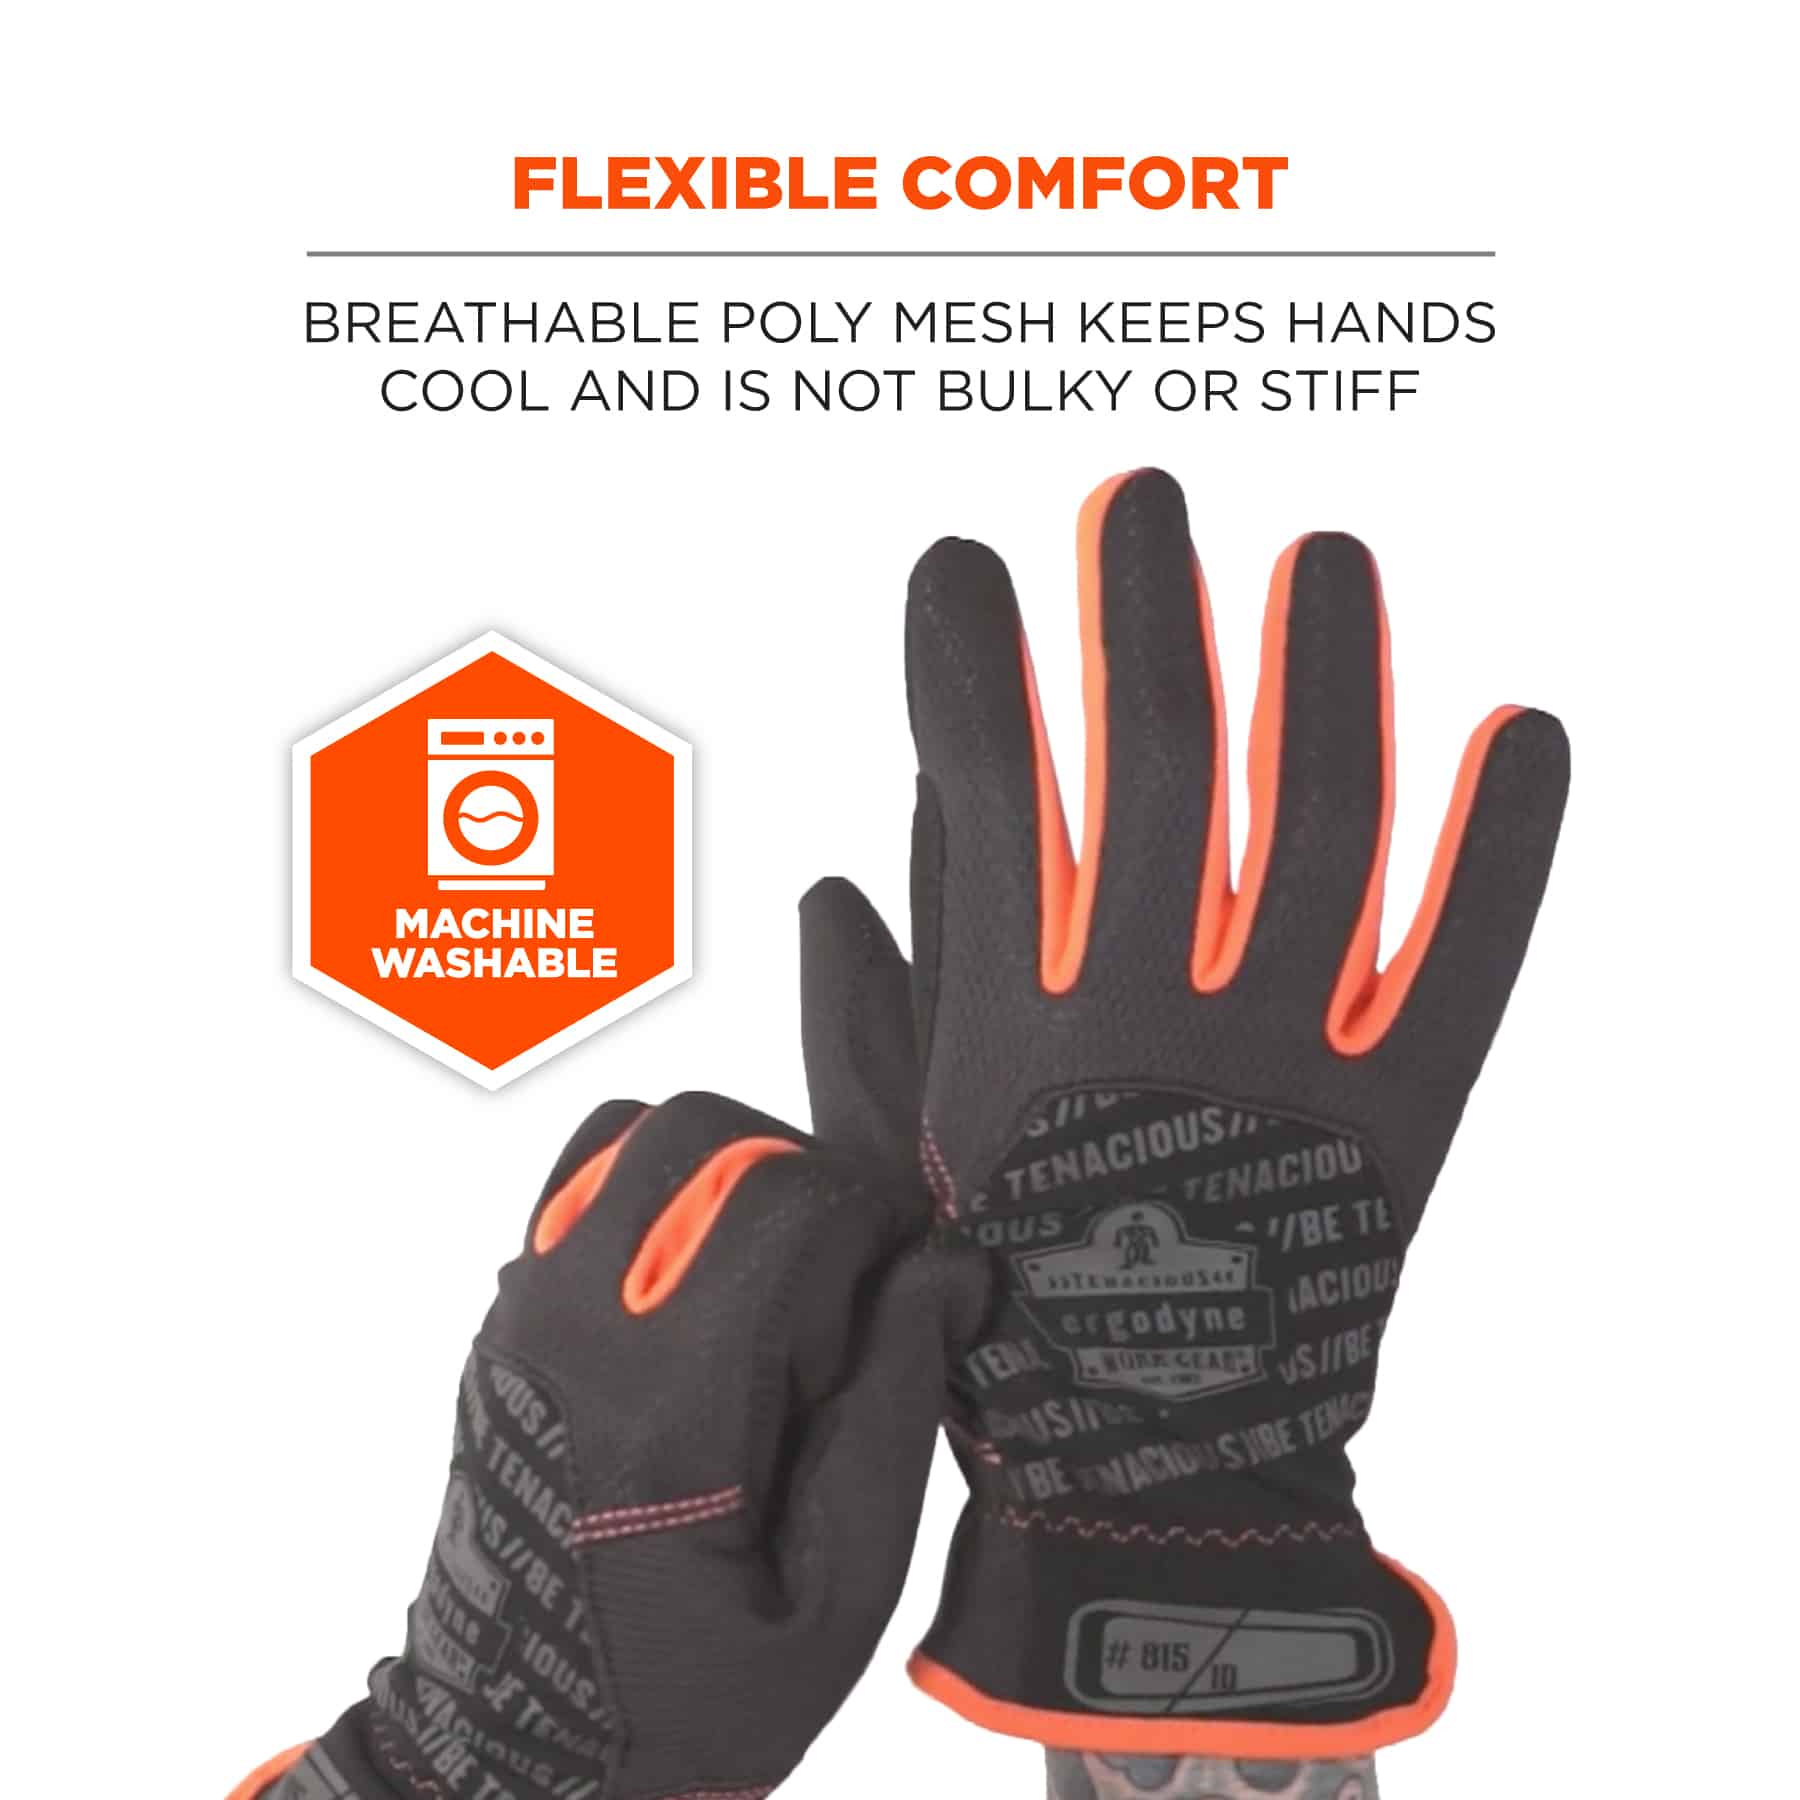 https://www.ergodyne.com/sites/default/files/product-images/17202-815-quickcuff-utility-gloves-flexible-comfort.jpg